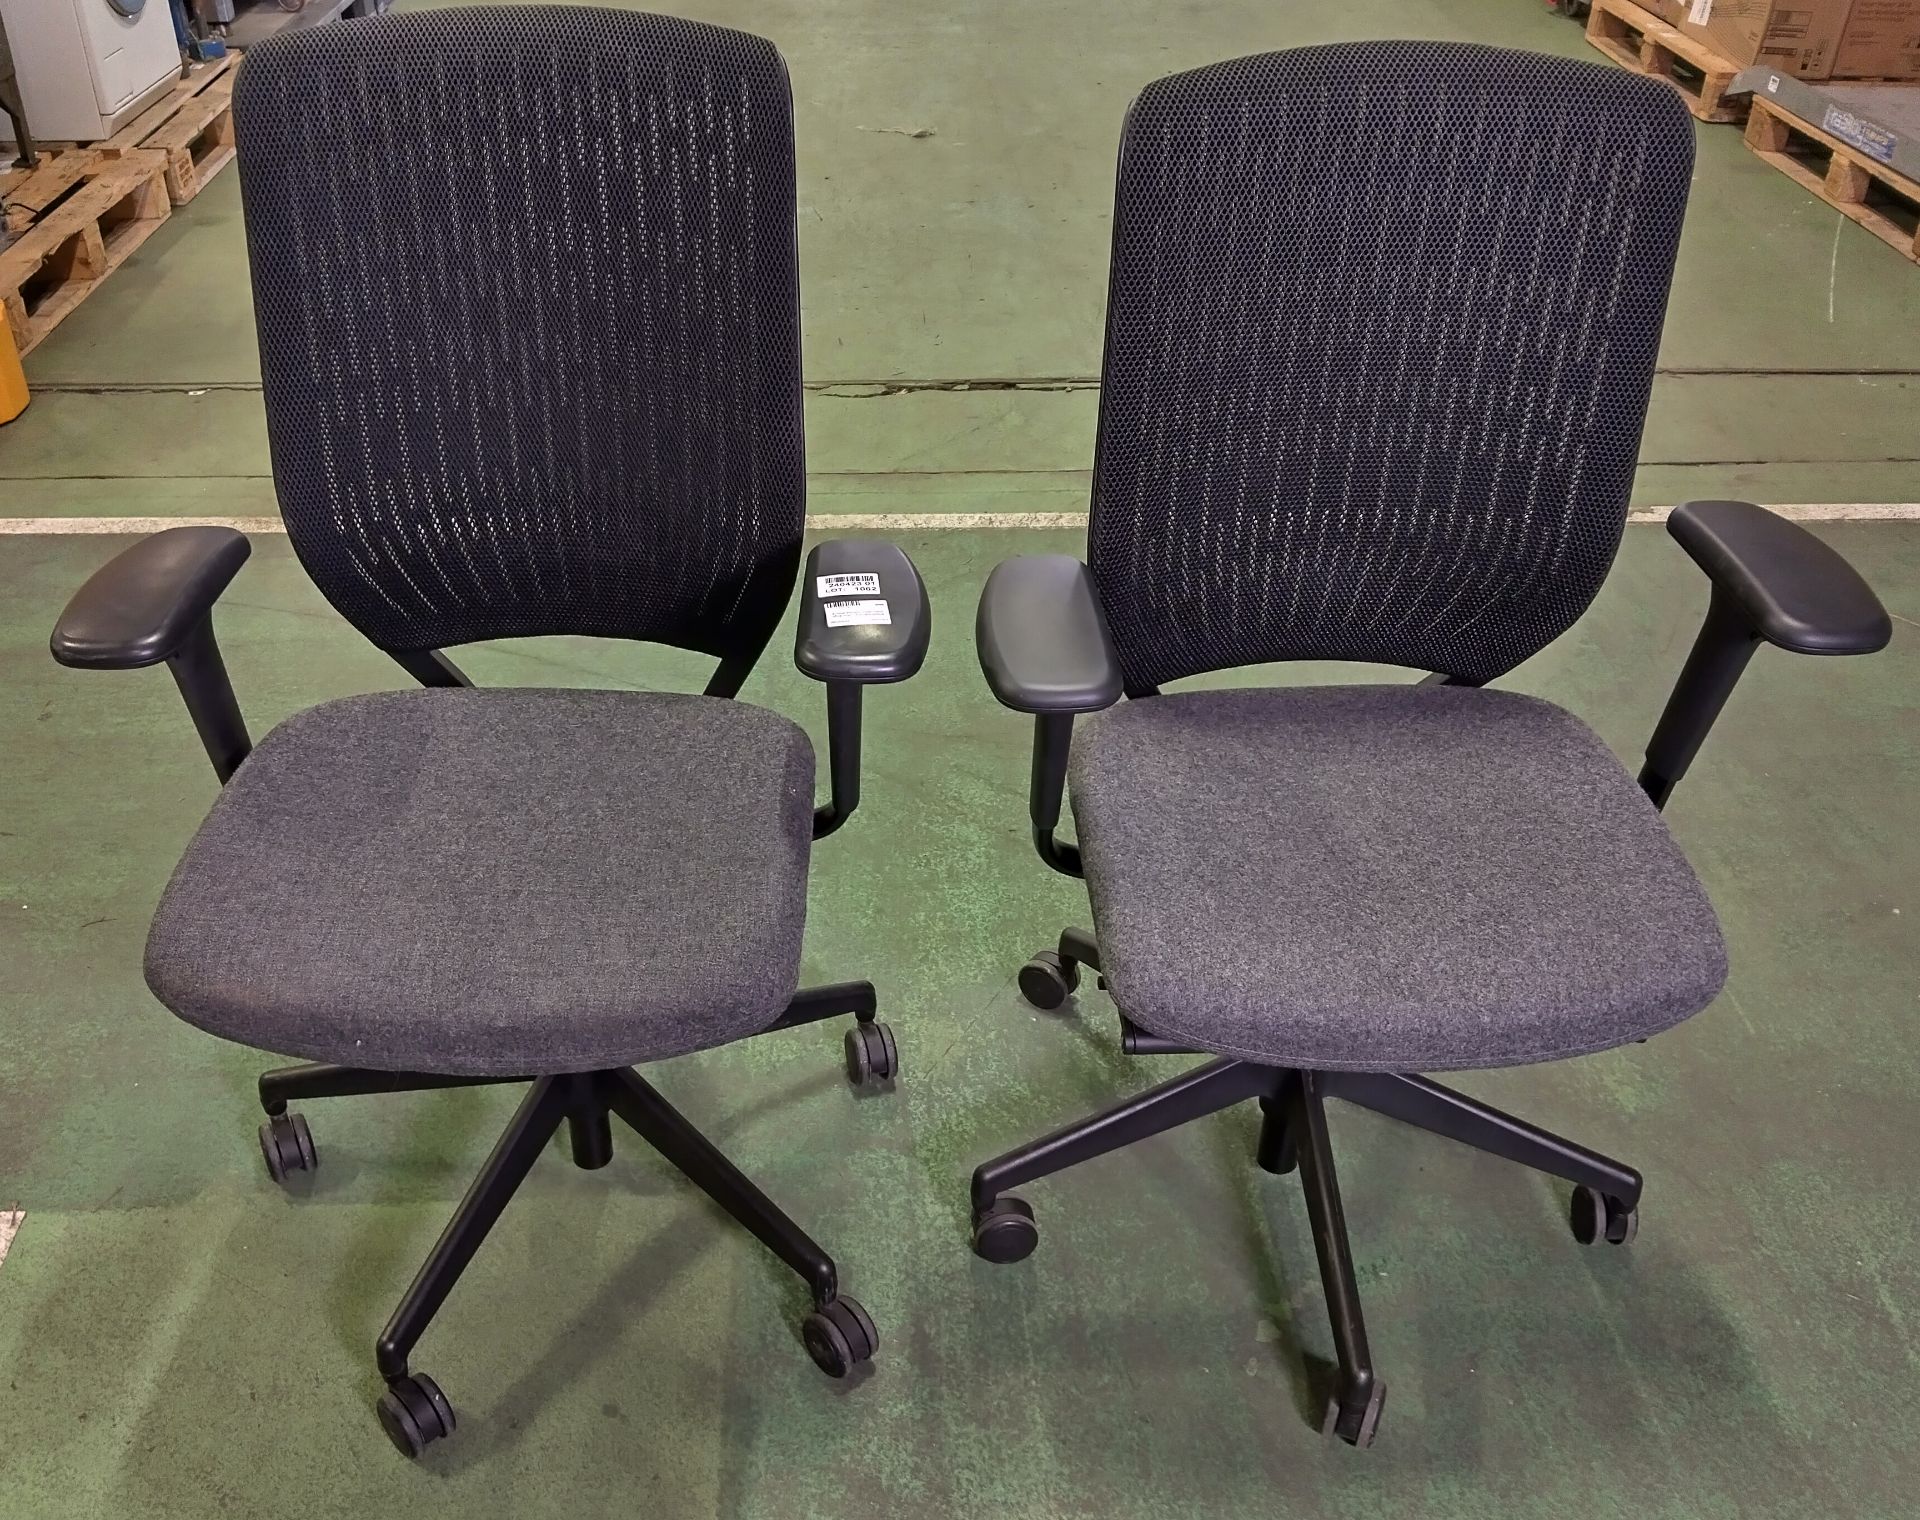 2x Evolve Senator mesh back office chairs - fully adjustable